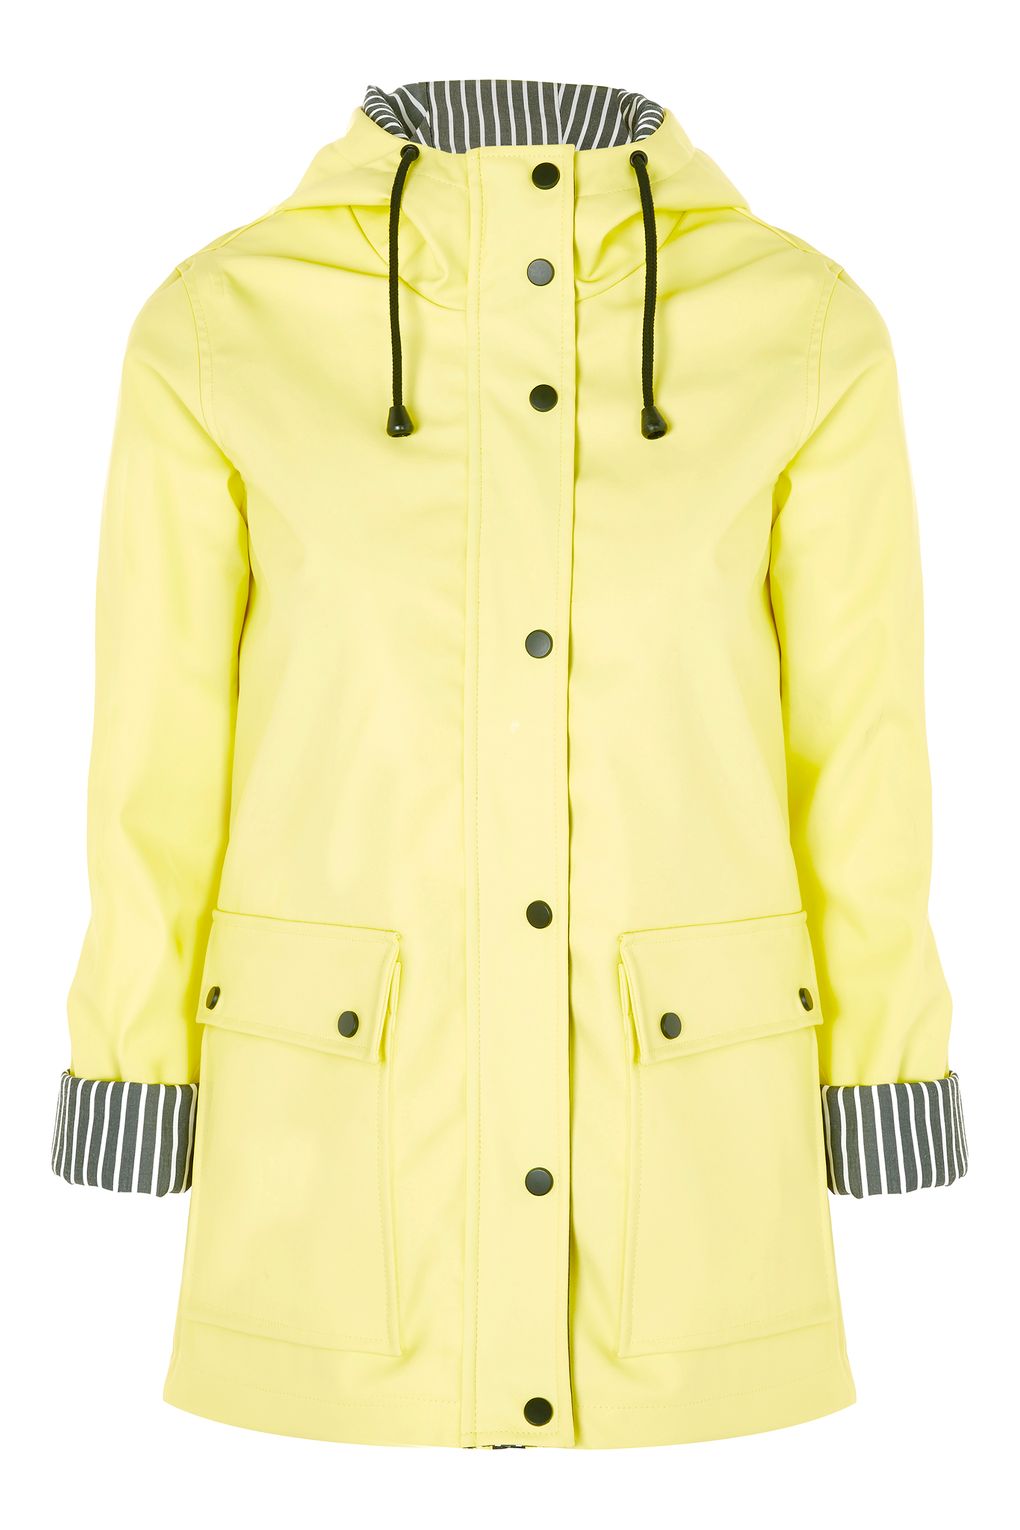 Yellow Hooded Raincoat Mac